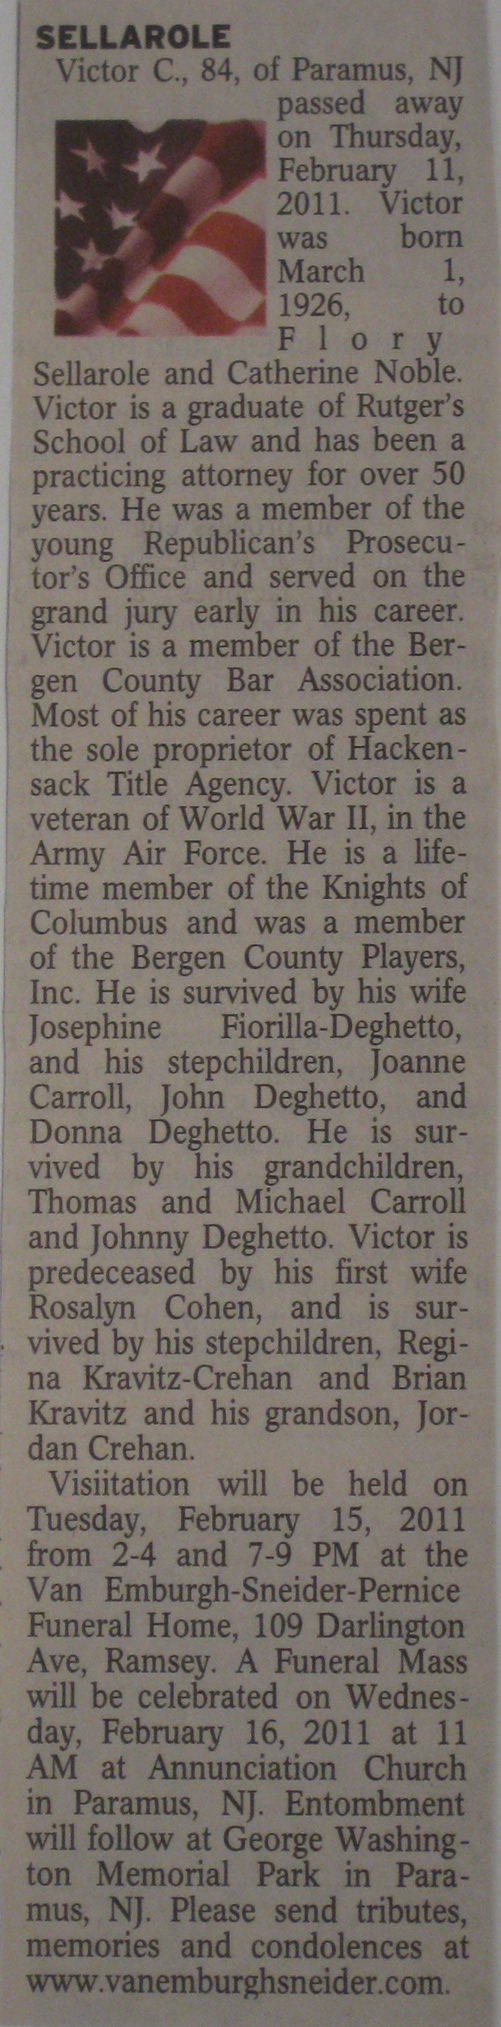 Victor C. Sellarole Obituary